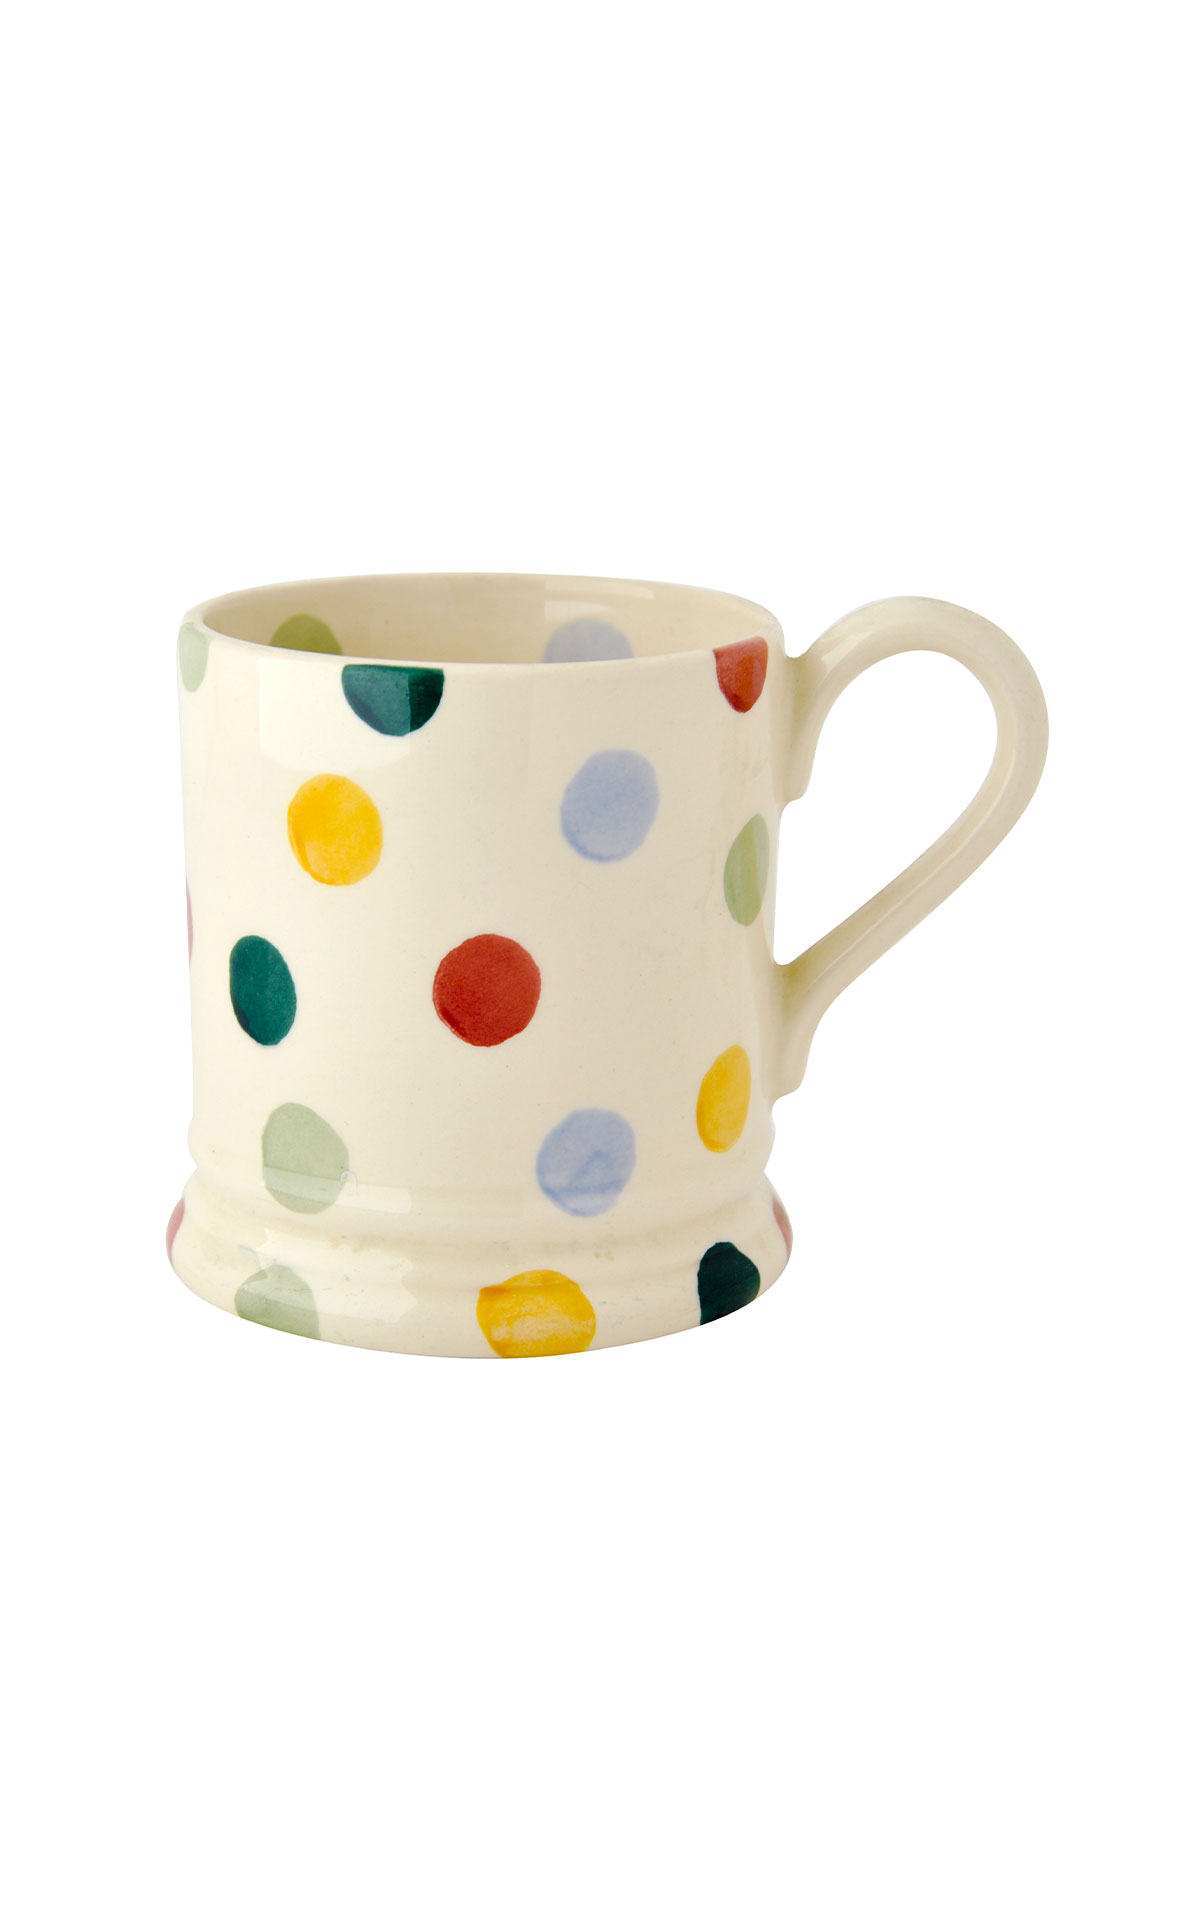 Emma Bridgewater Polka dot half pint mug from Bicester Village